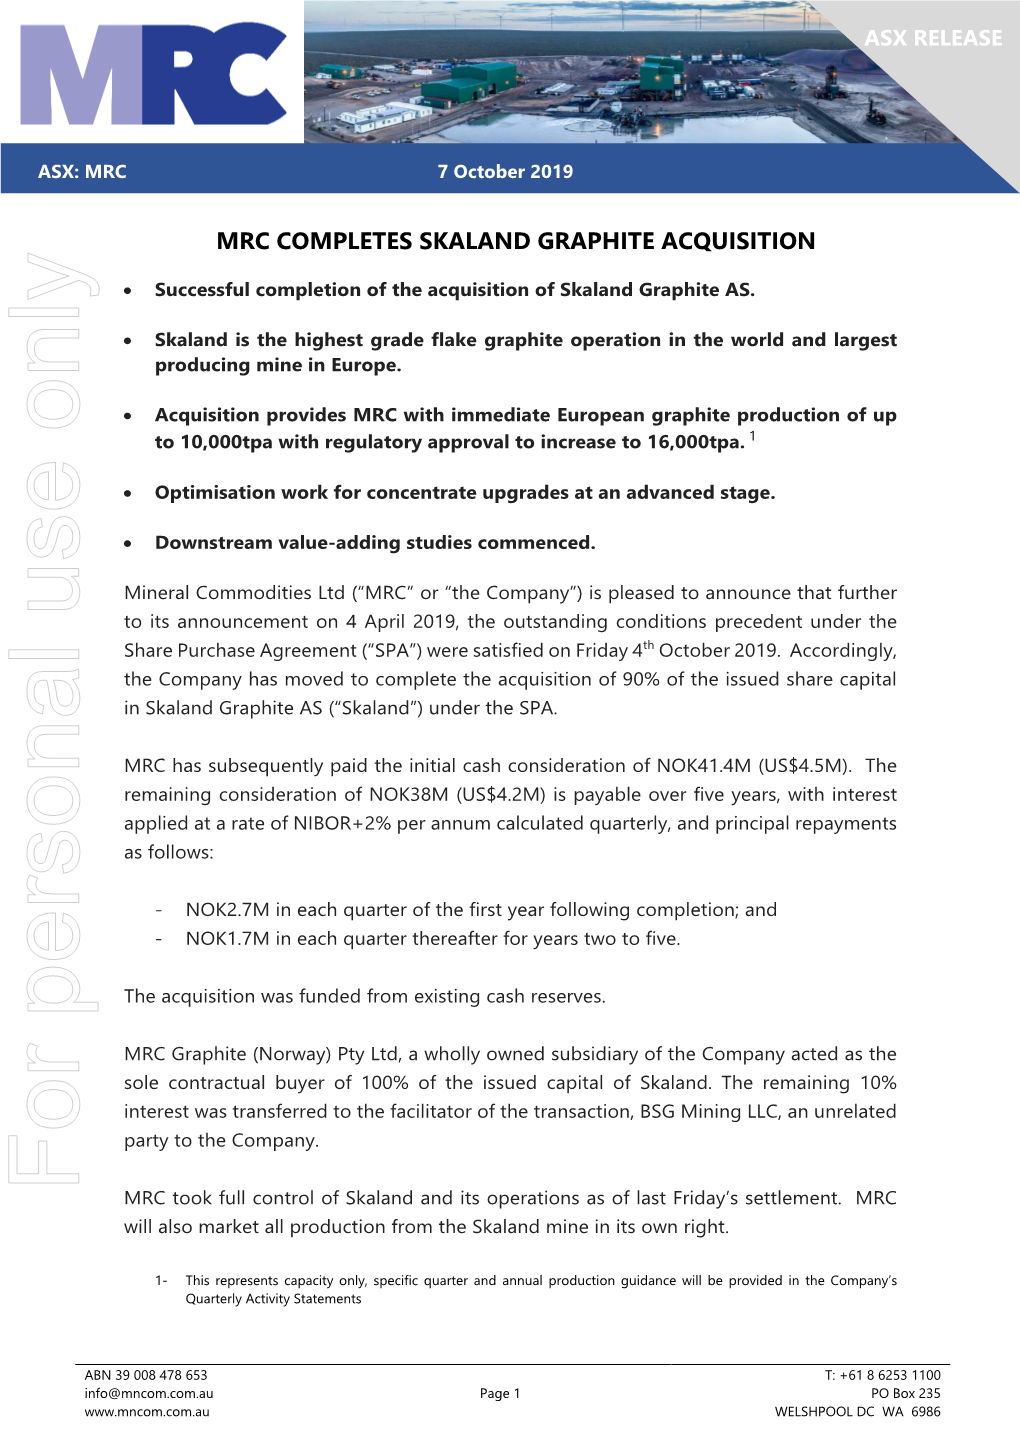 Mrc Completes Skaland Graphite Acquisition